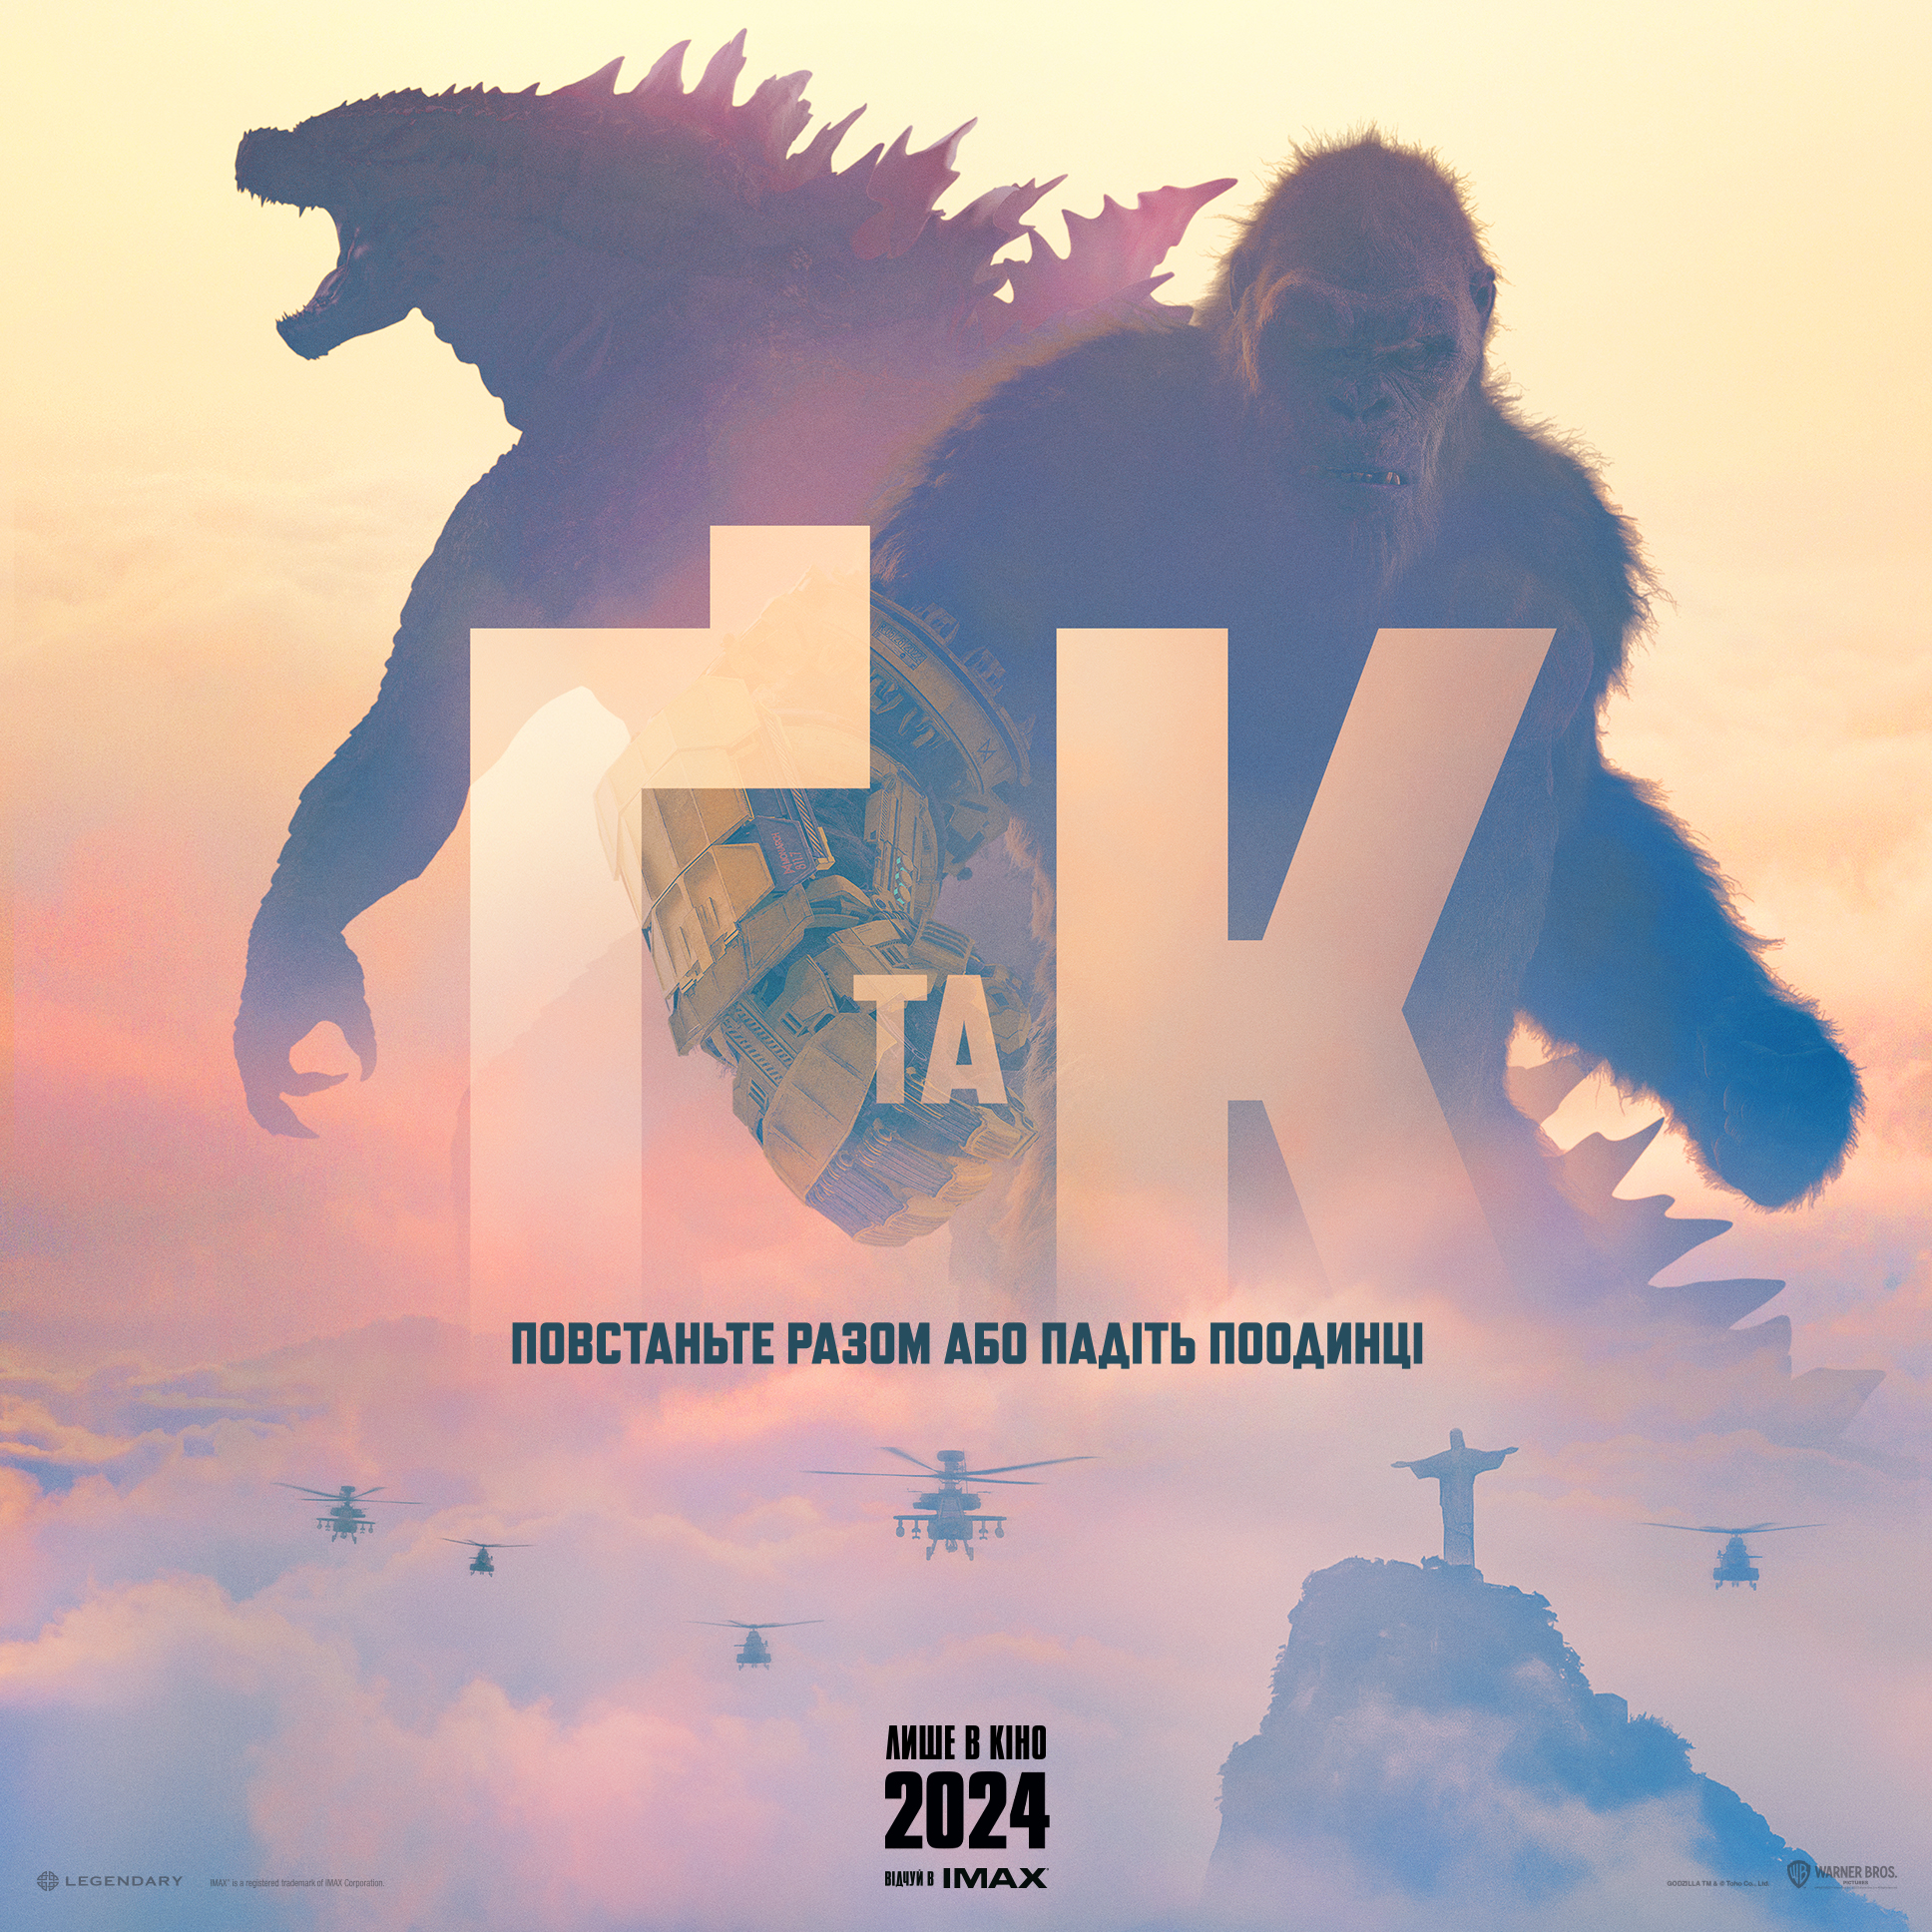 Godzilla and Kong: The New Empire